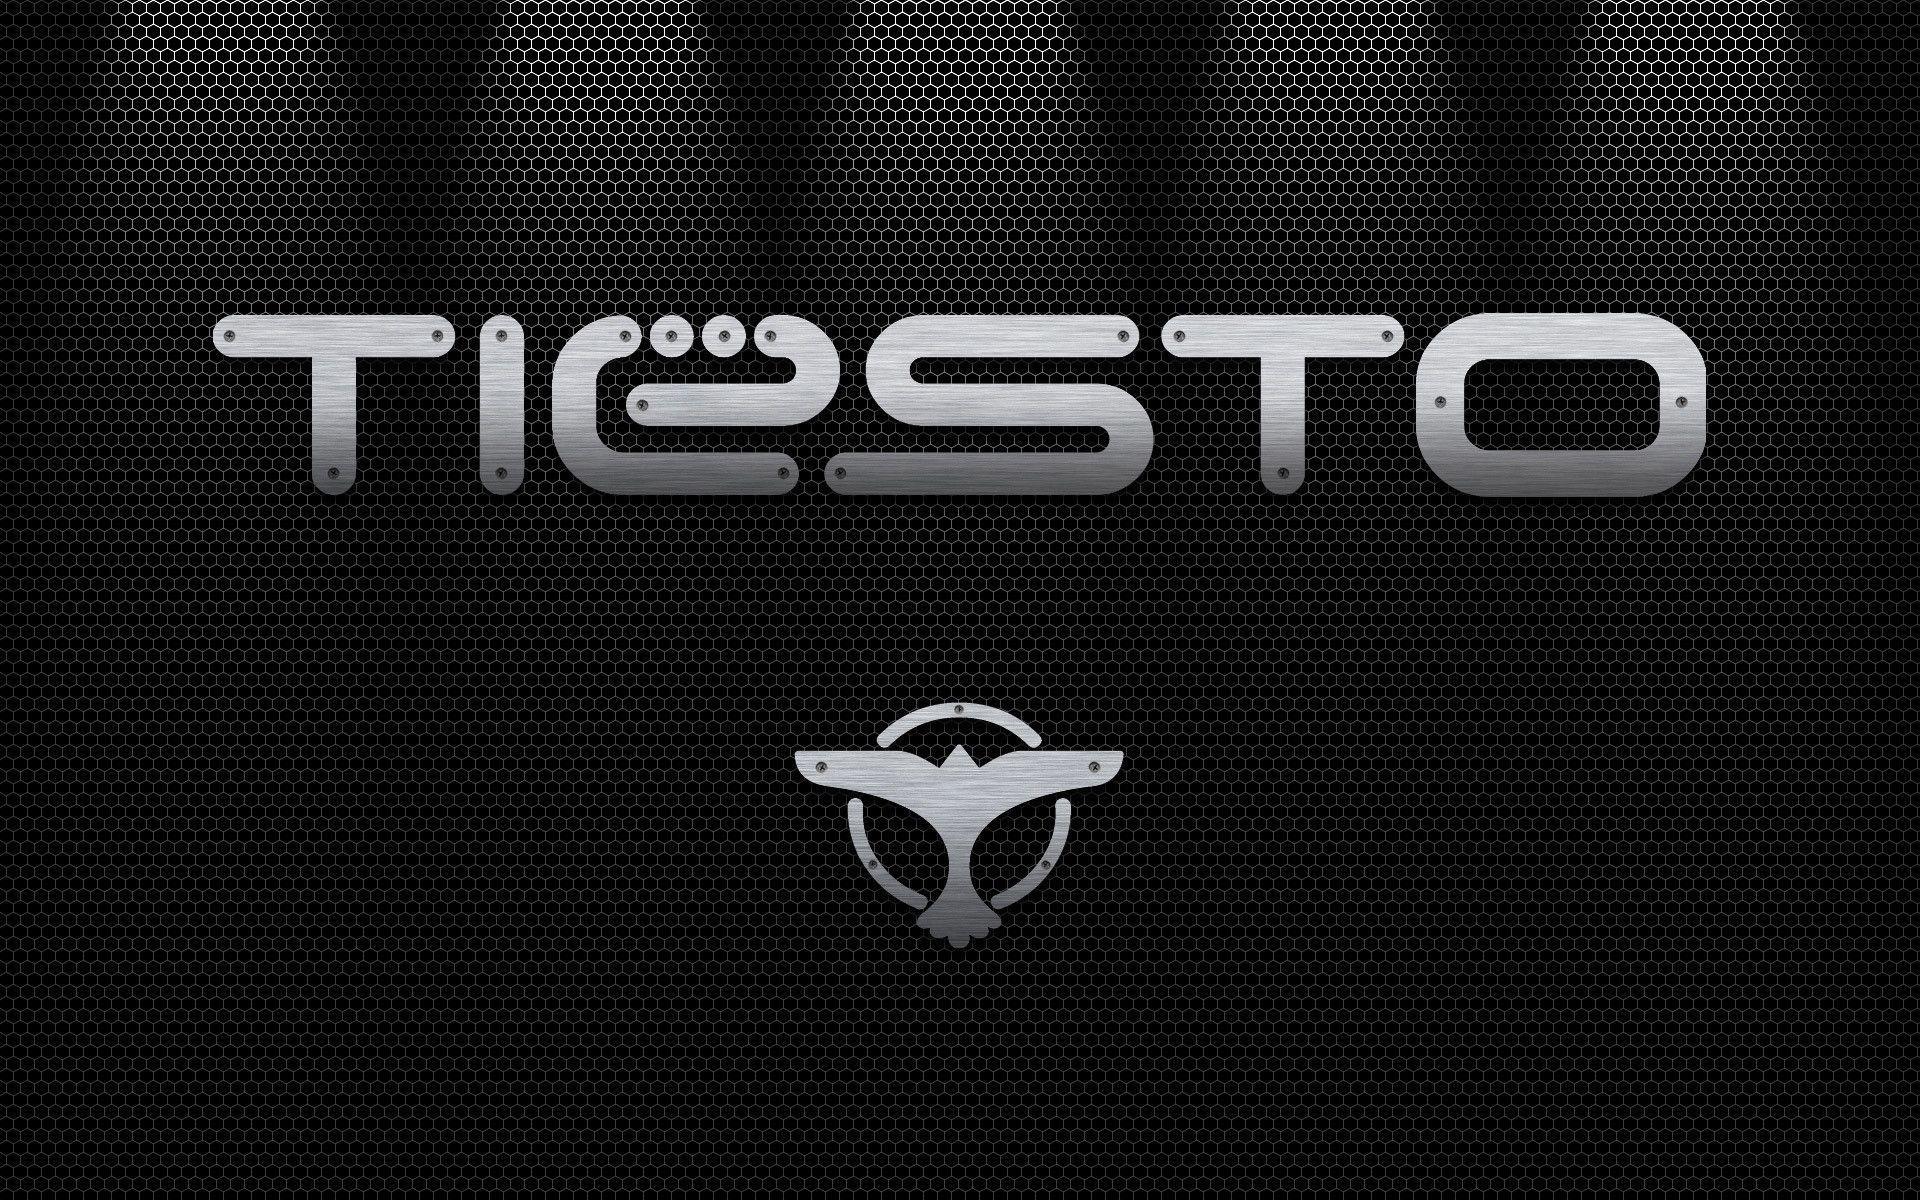 DJ Tiesto logo wallpaper and image, picture, photo